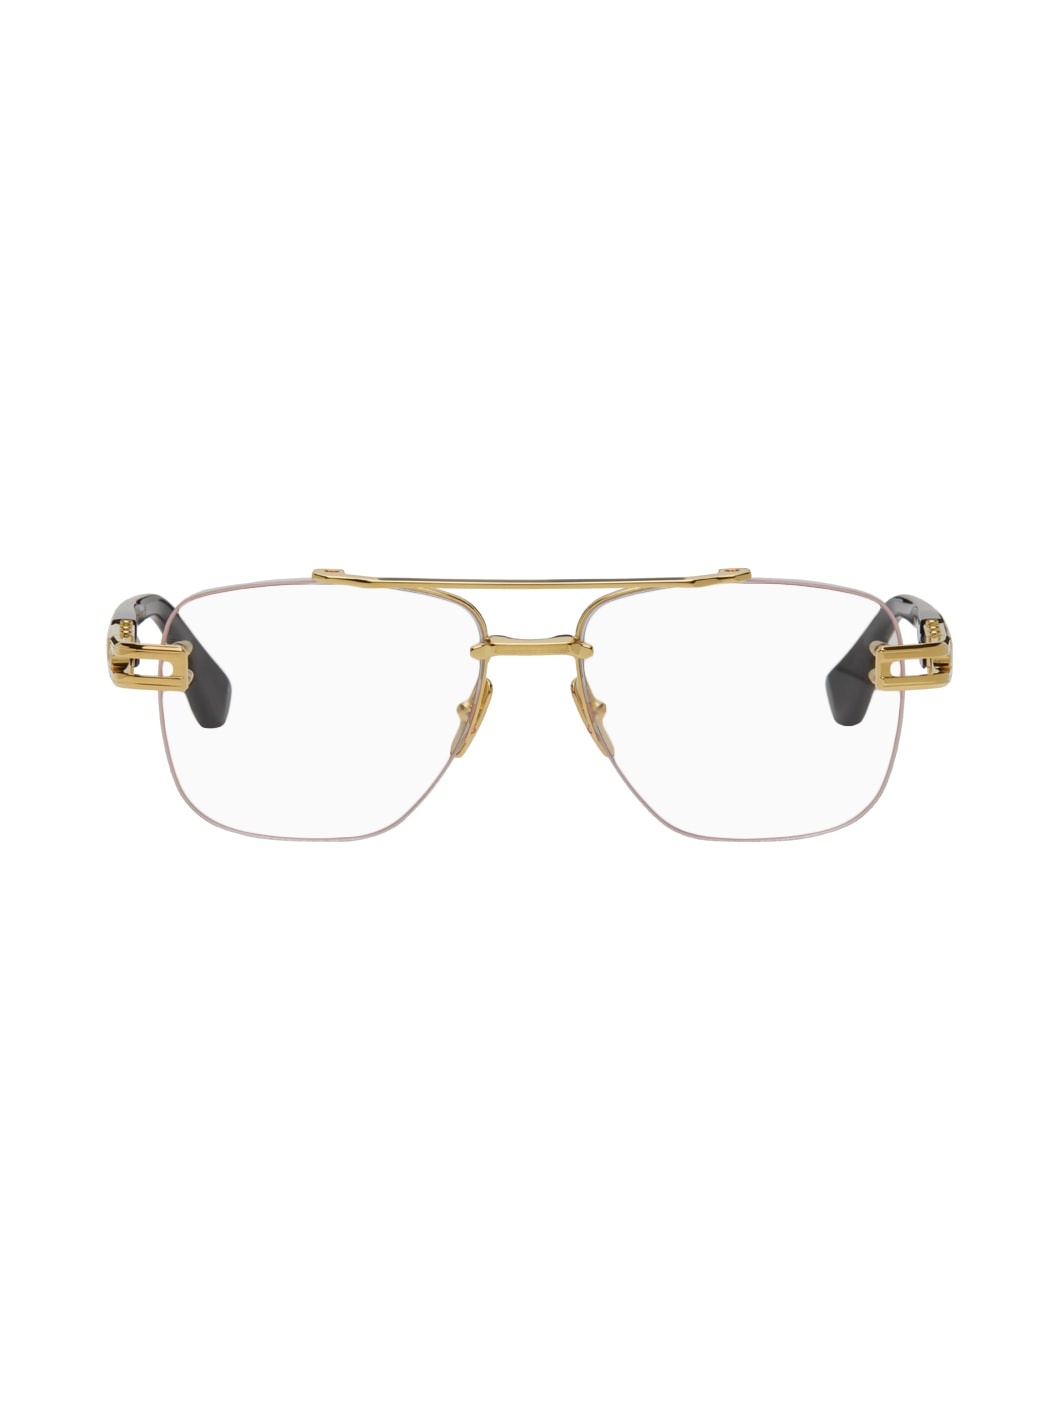 Gold Grand-Evo Rx Glasses - 1